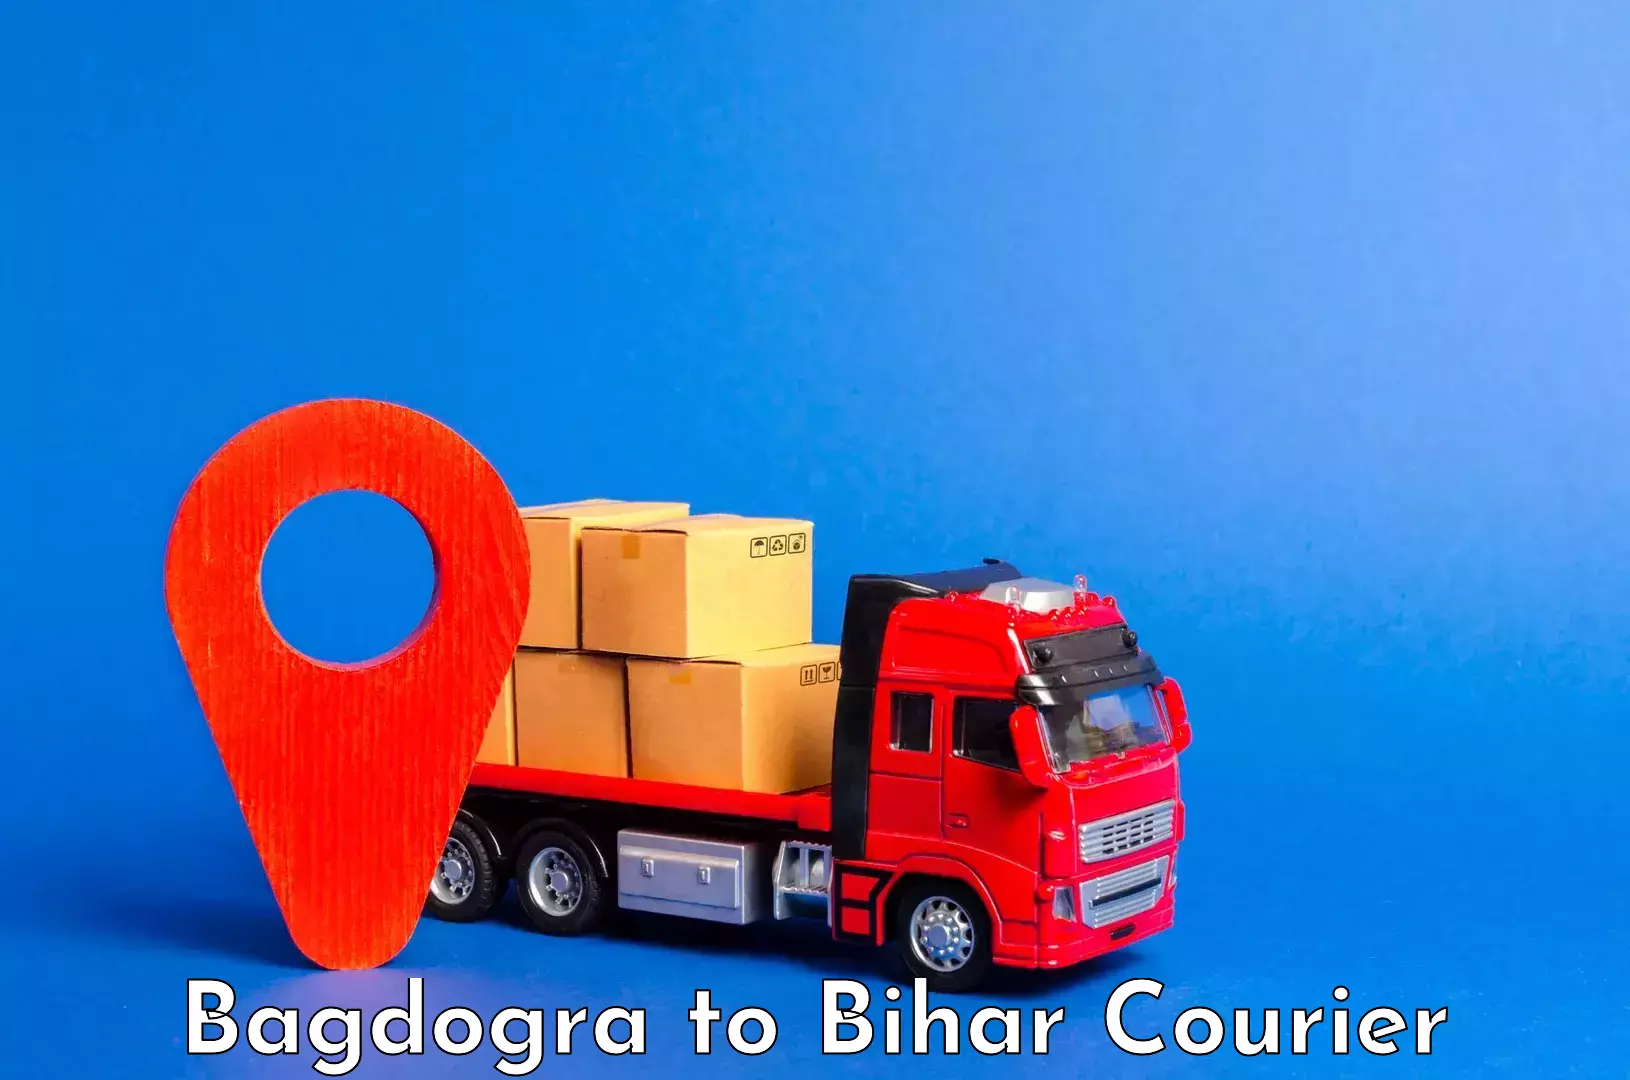 Baggage transport network Bagdogra to Sangrampur